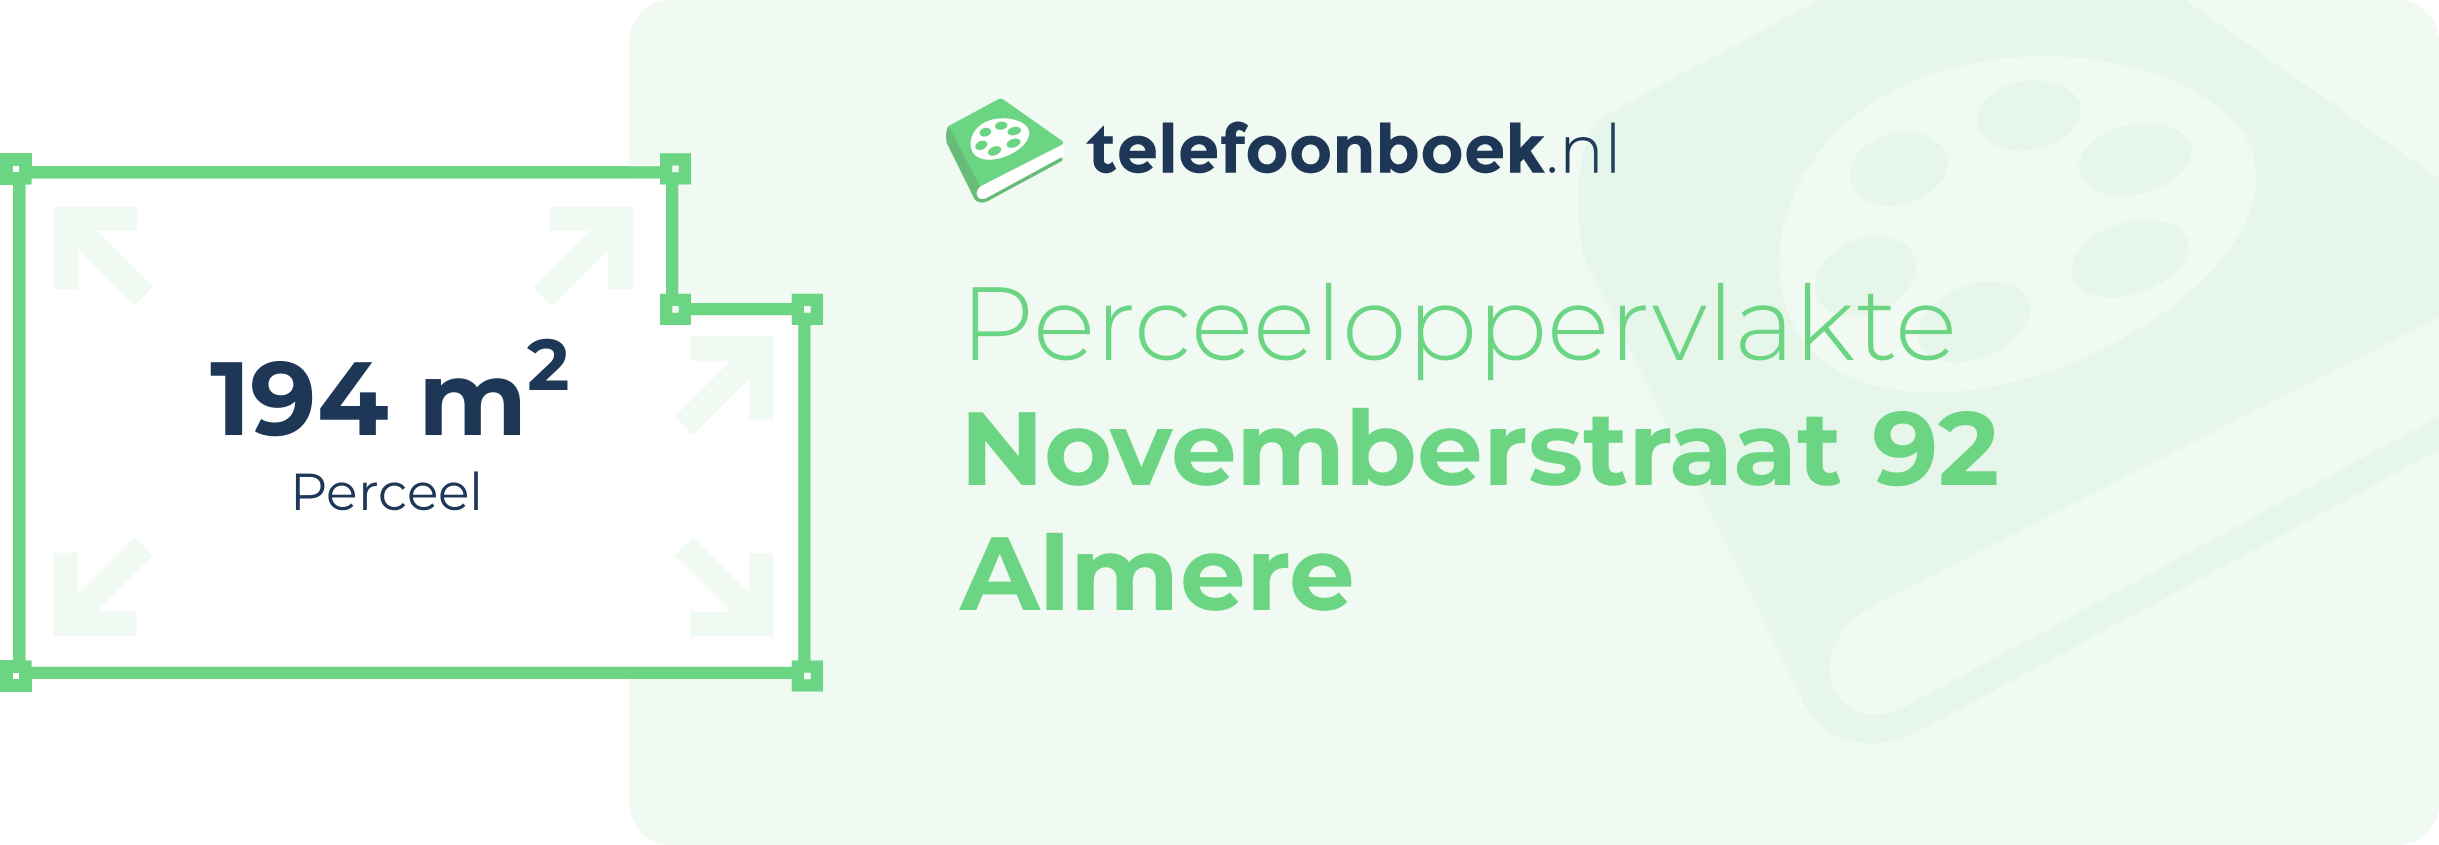 Perceeloppervlakte Novemberstraat 92 Almere